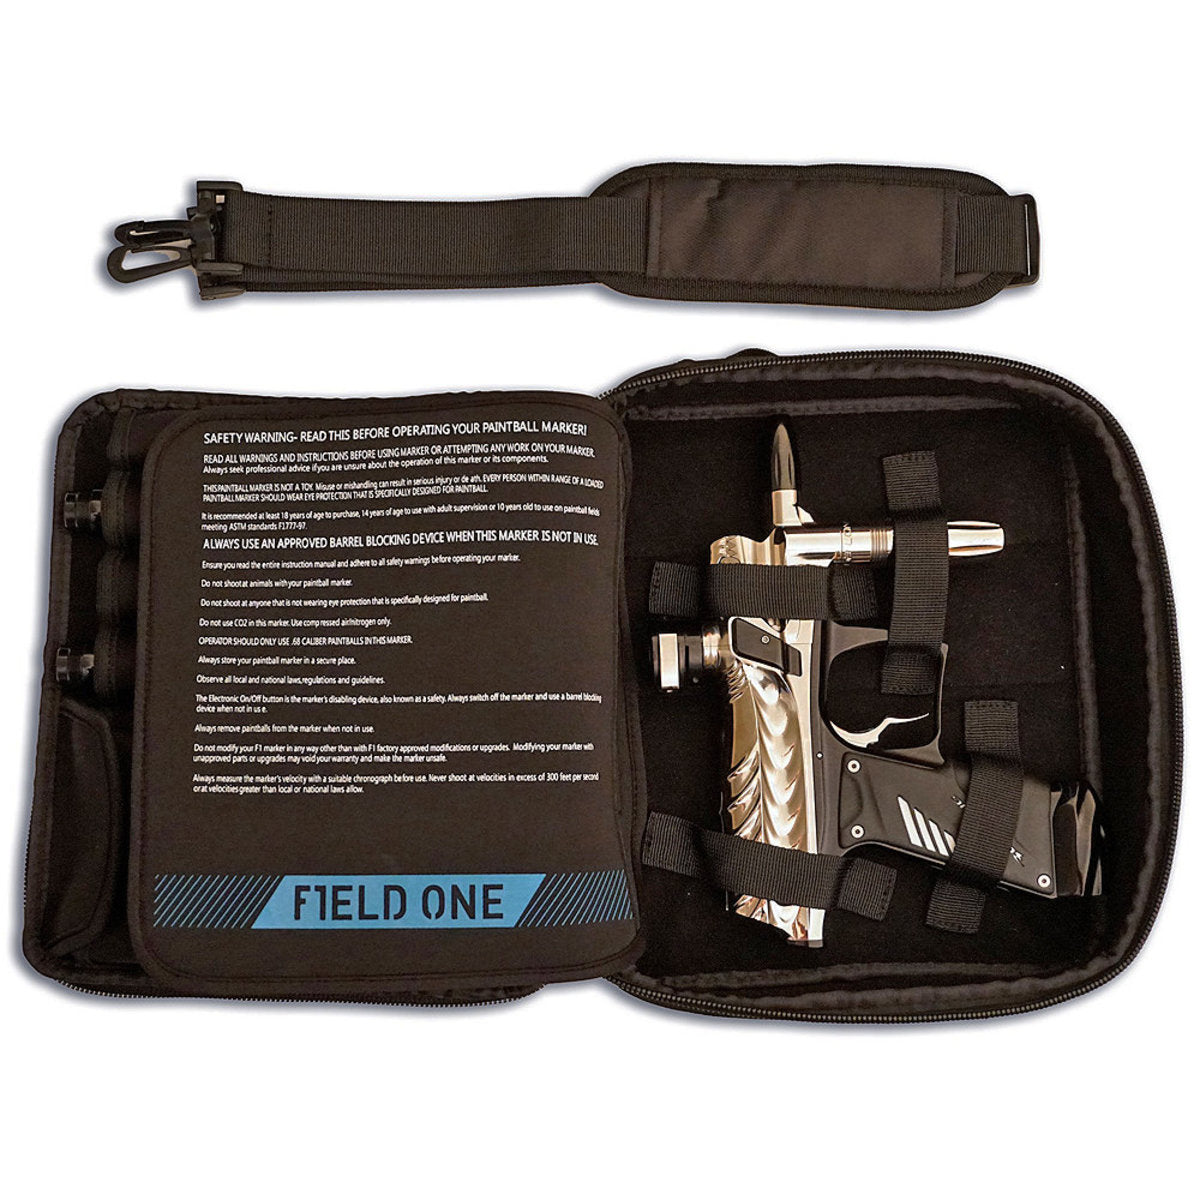 Field One Marker Bag Paintball Gun & Pistol Case